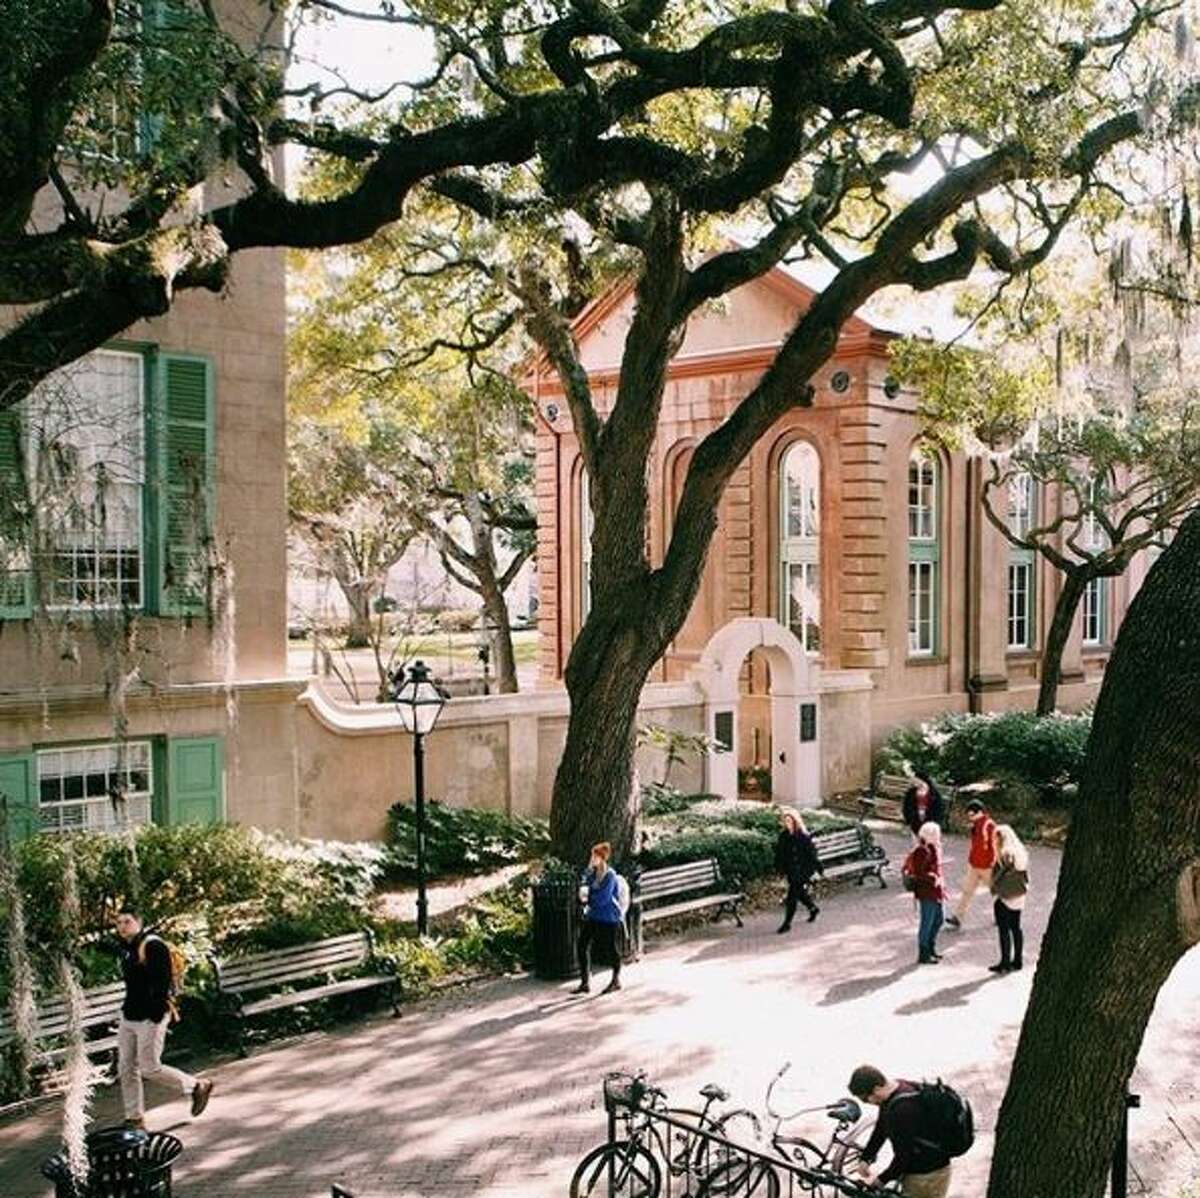 College of Charleston in Charleston, South Carolina